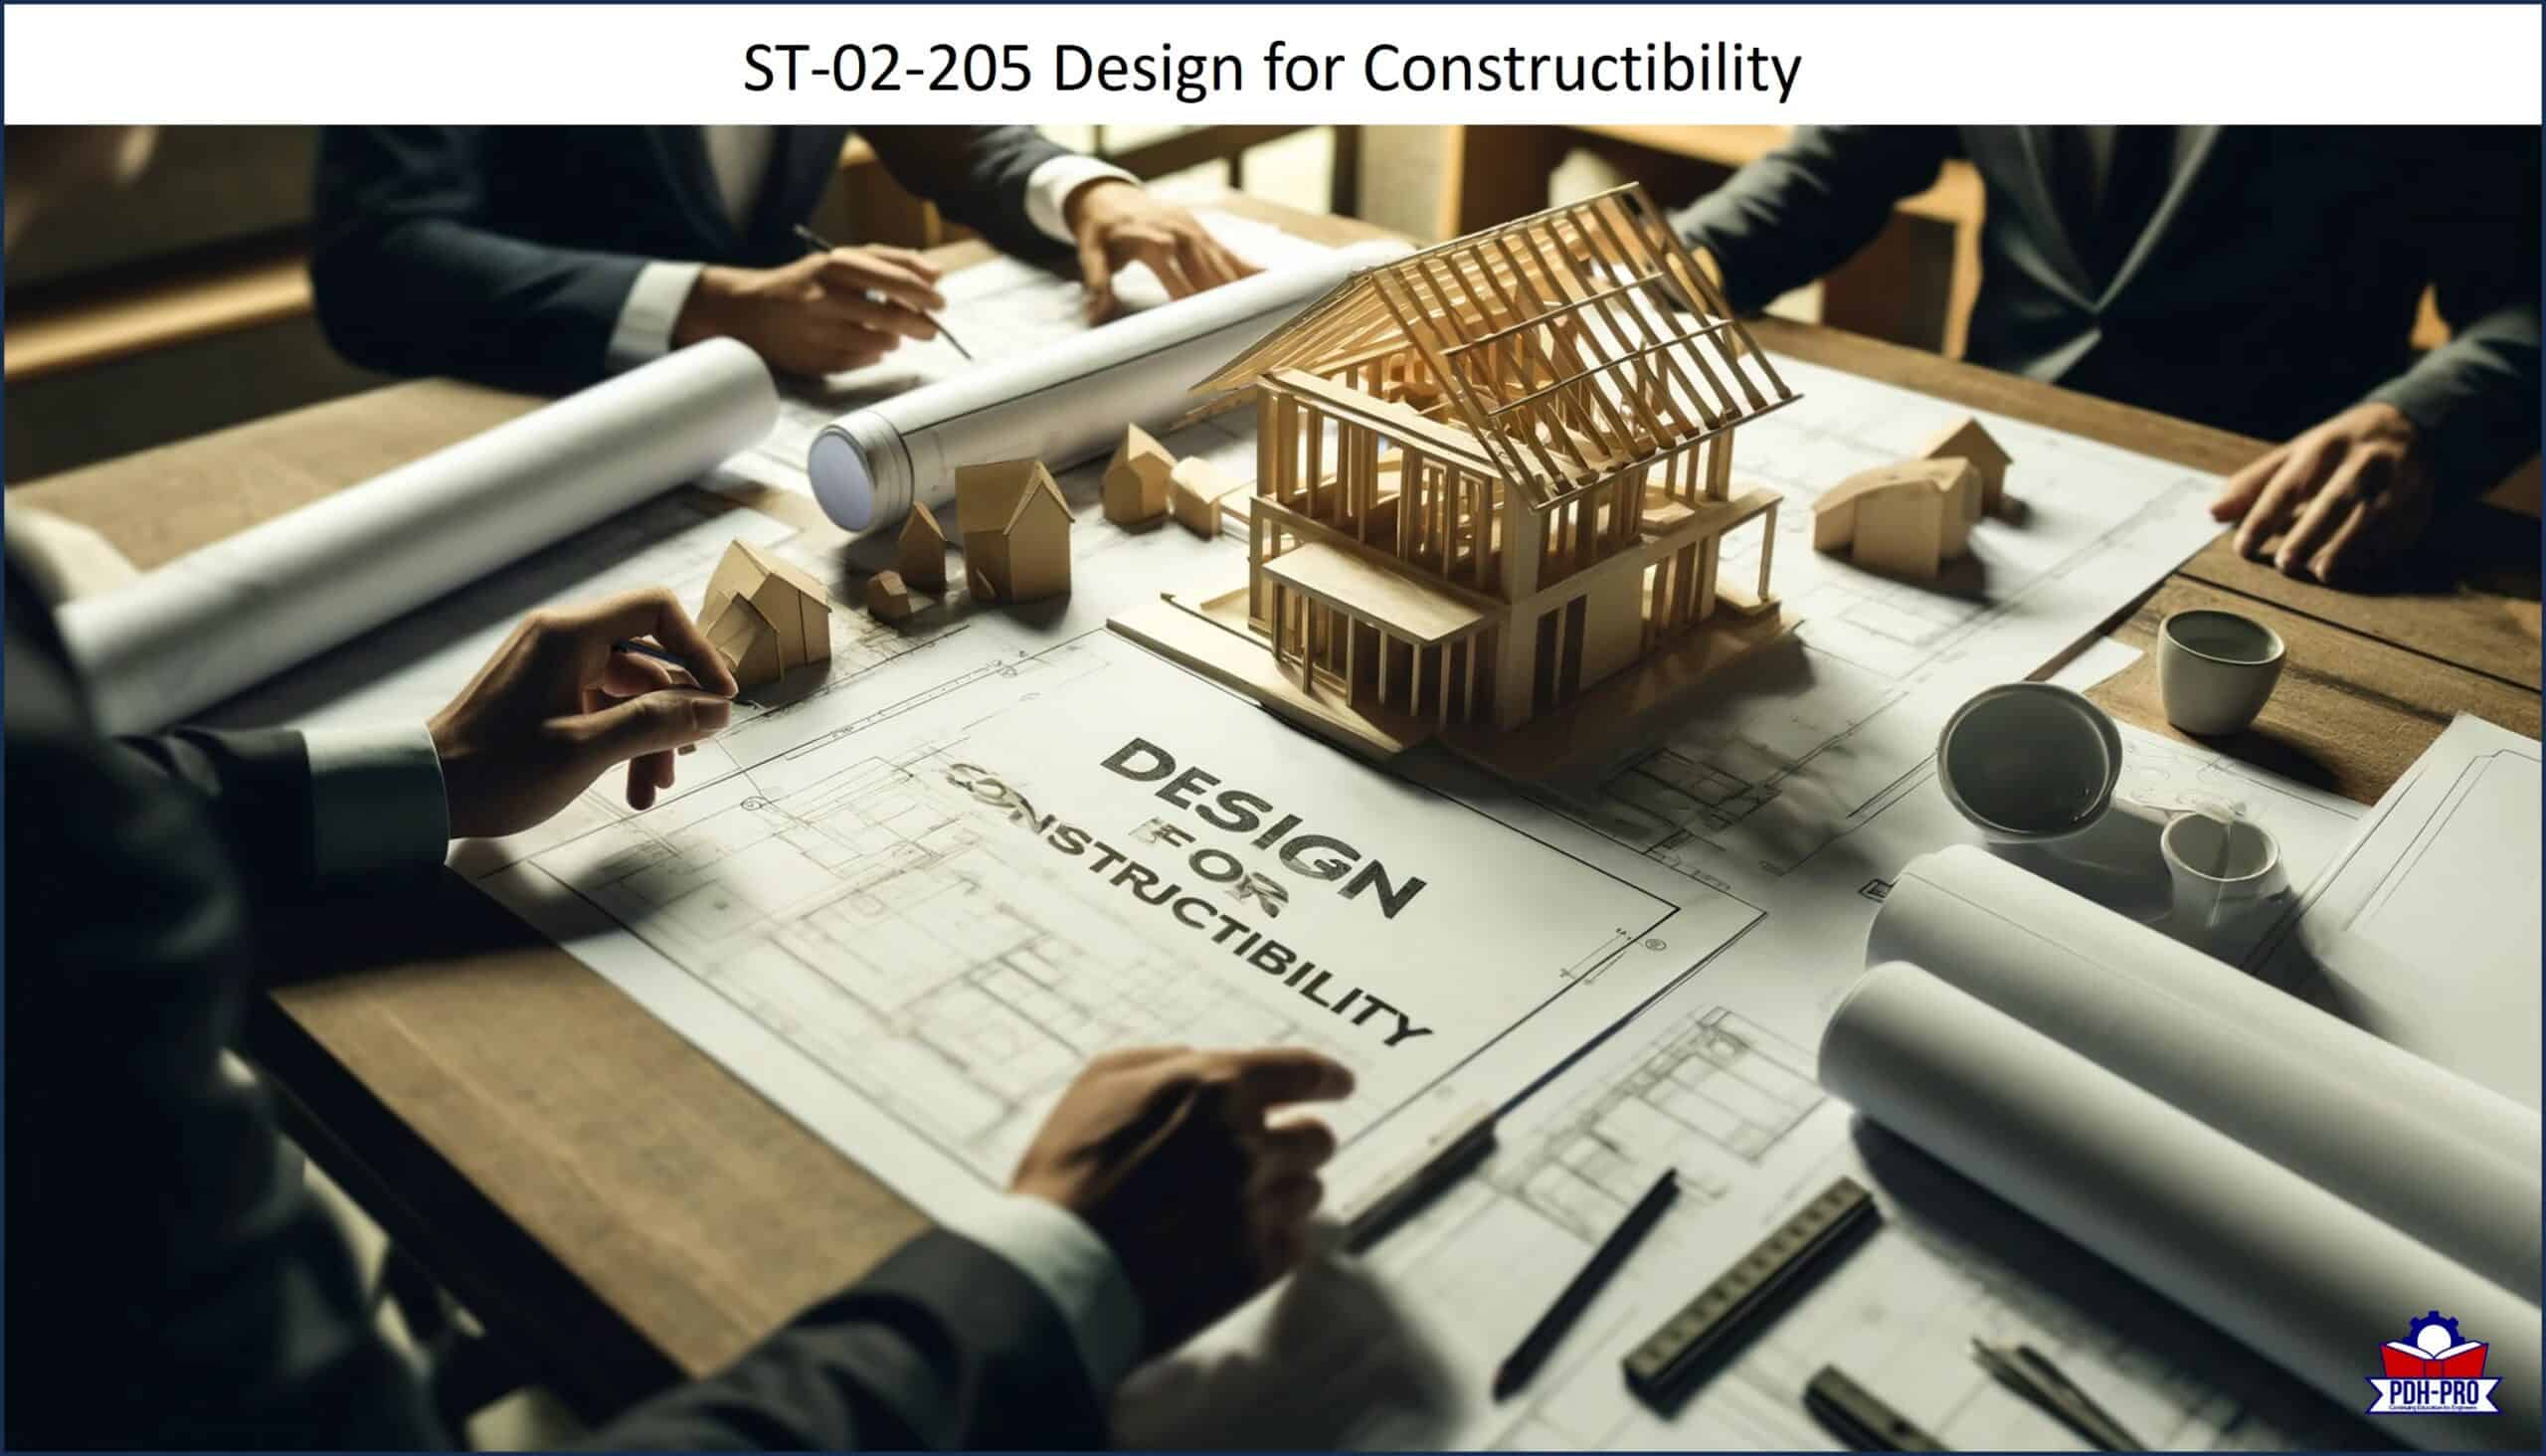 Design for Constructibility